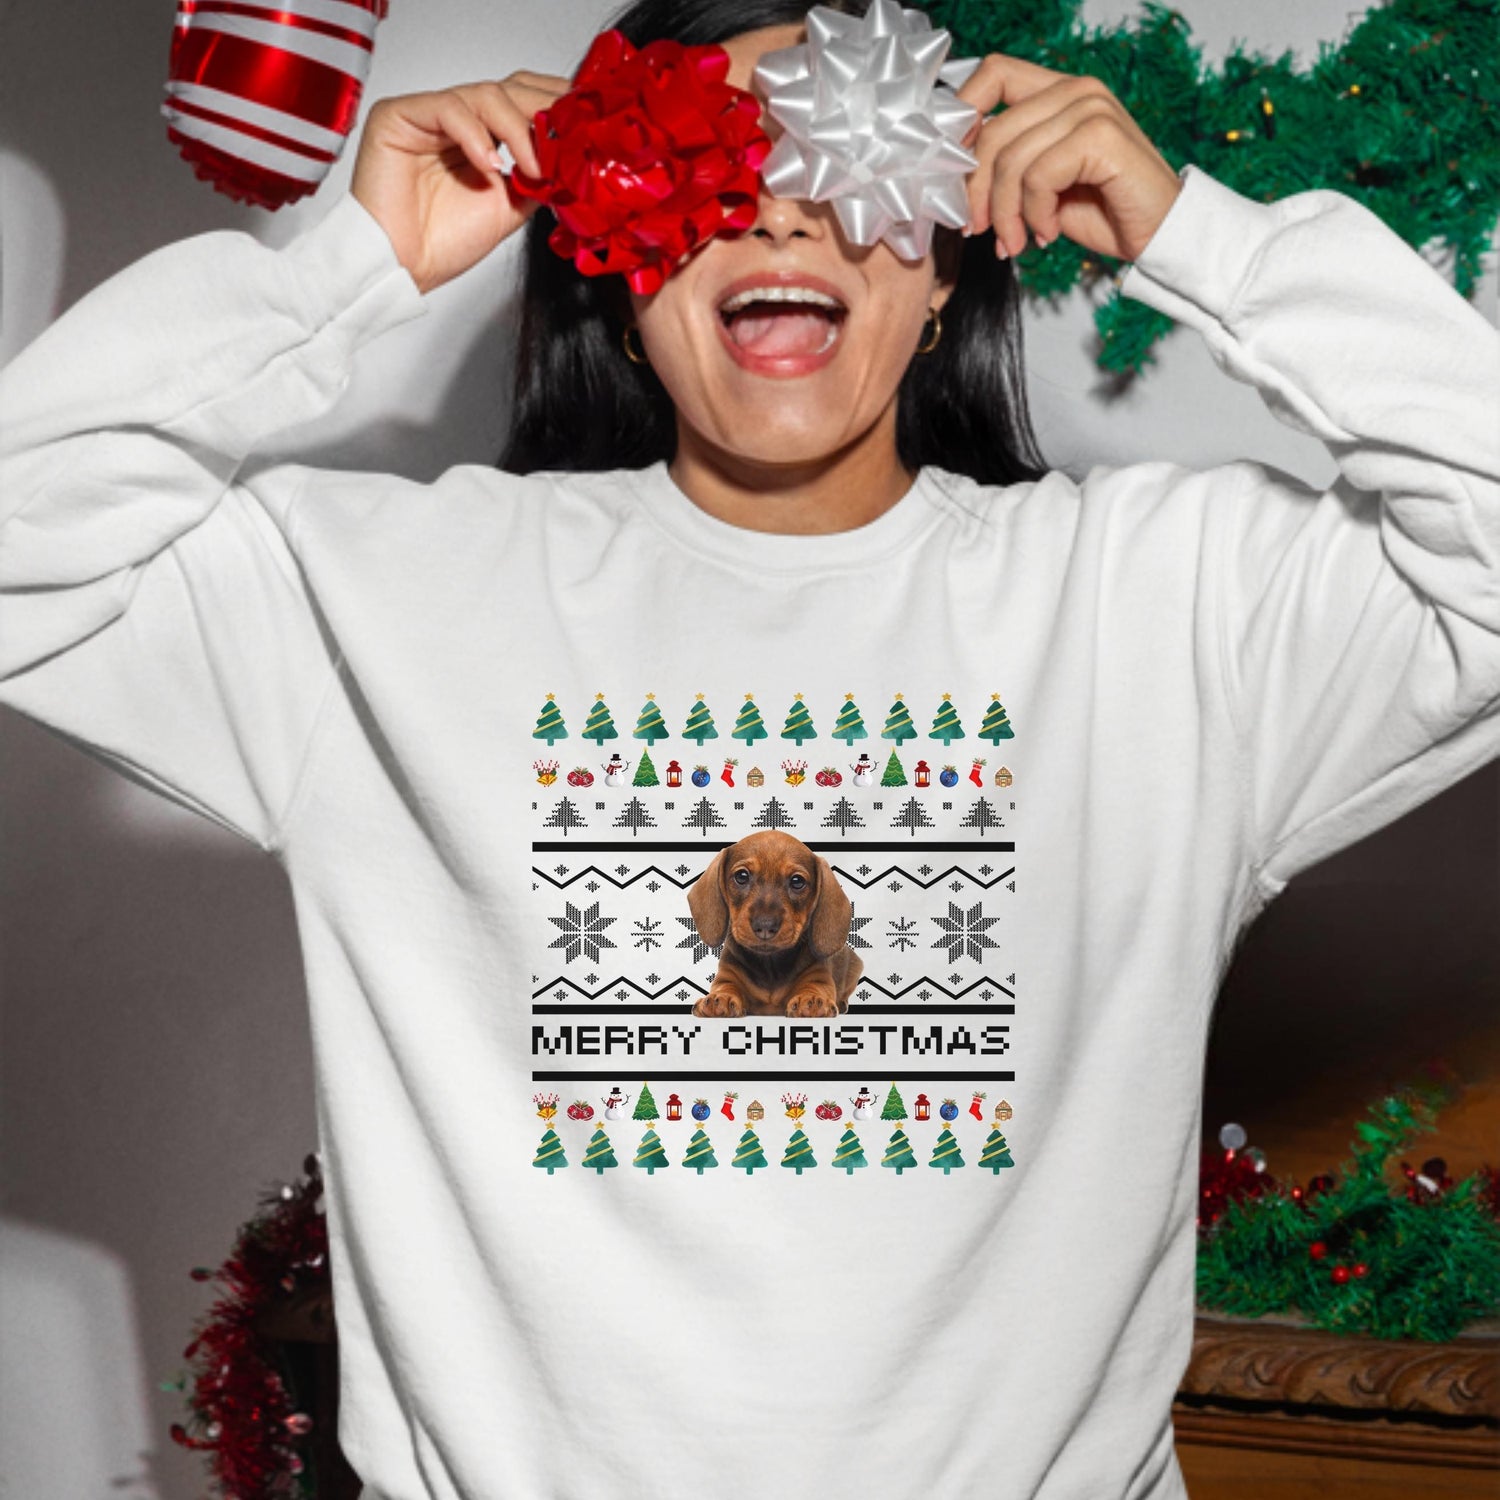 A woman wearing a white christmas style sweatshirt in a joyful mood.